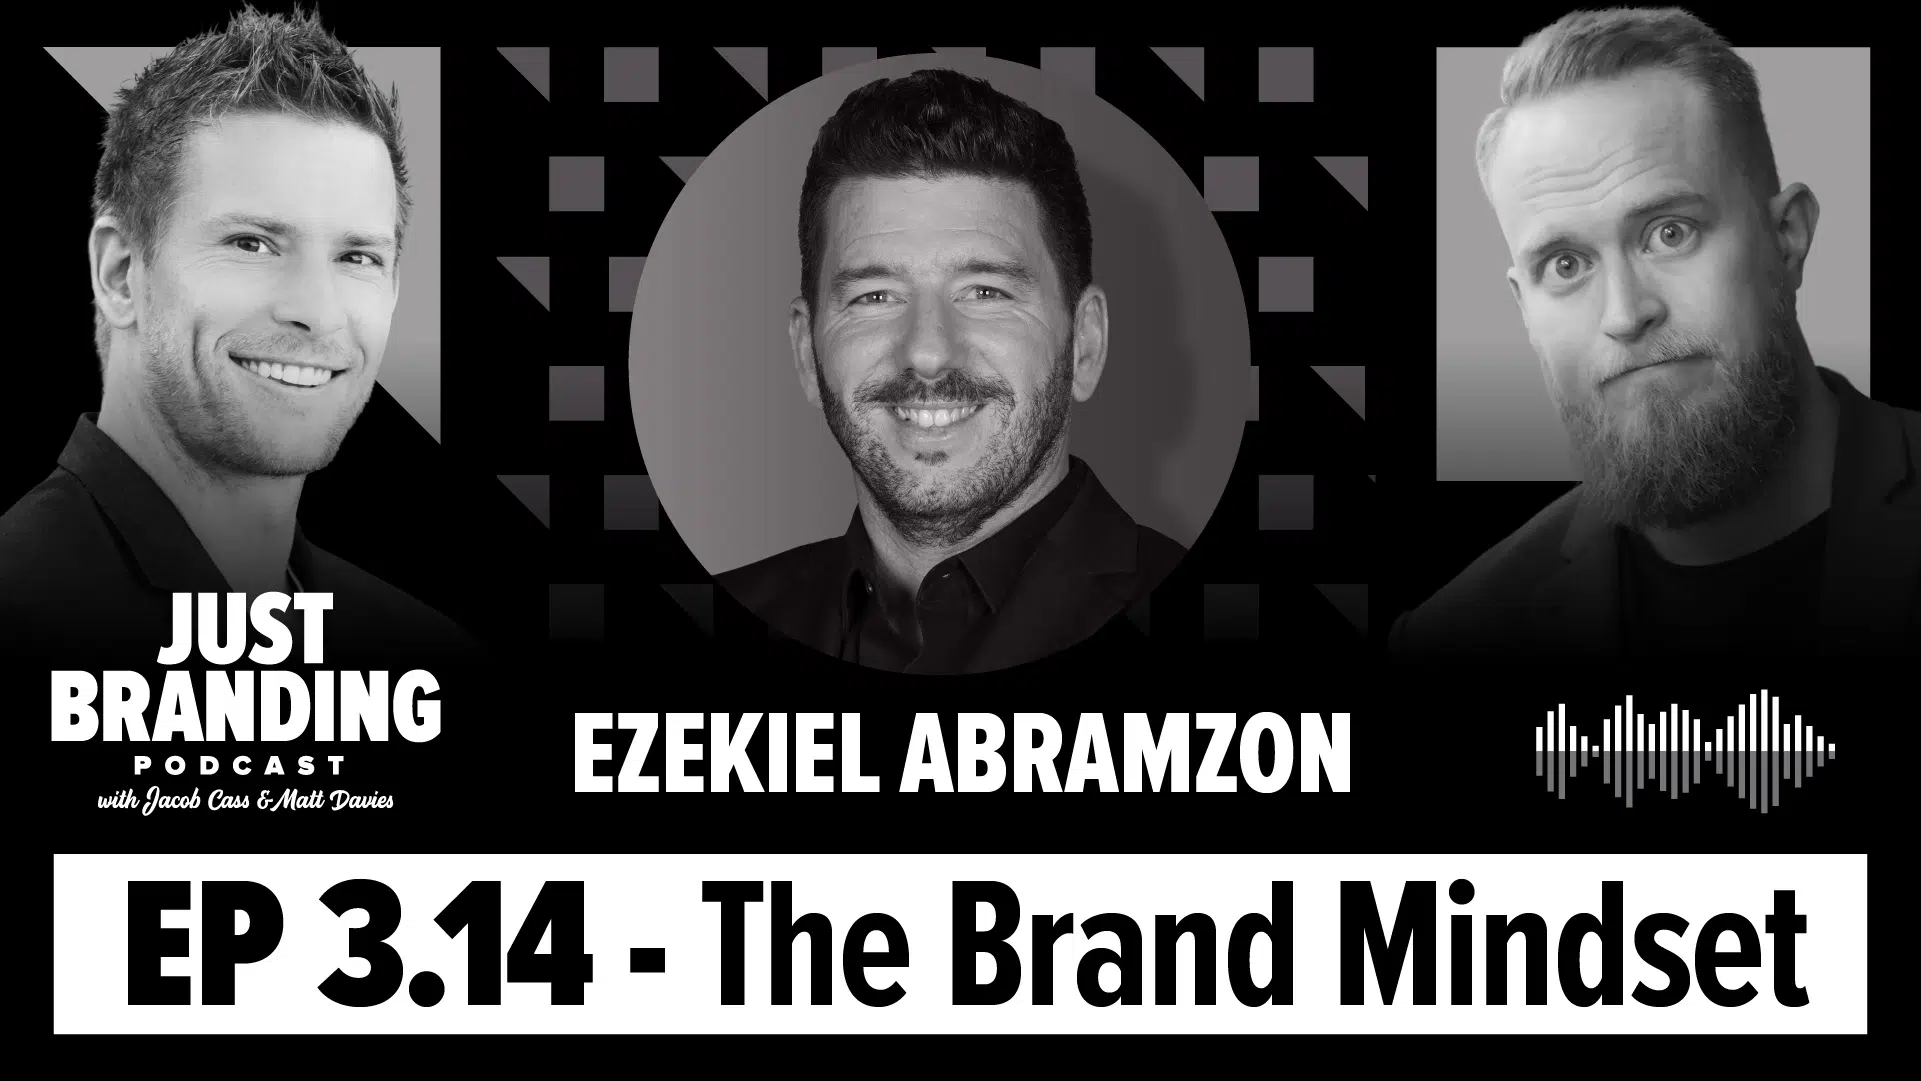 The Brand Mindset with Ezequiel Abramzon